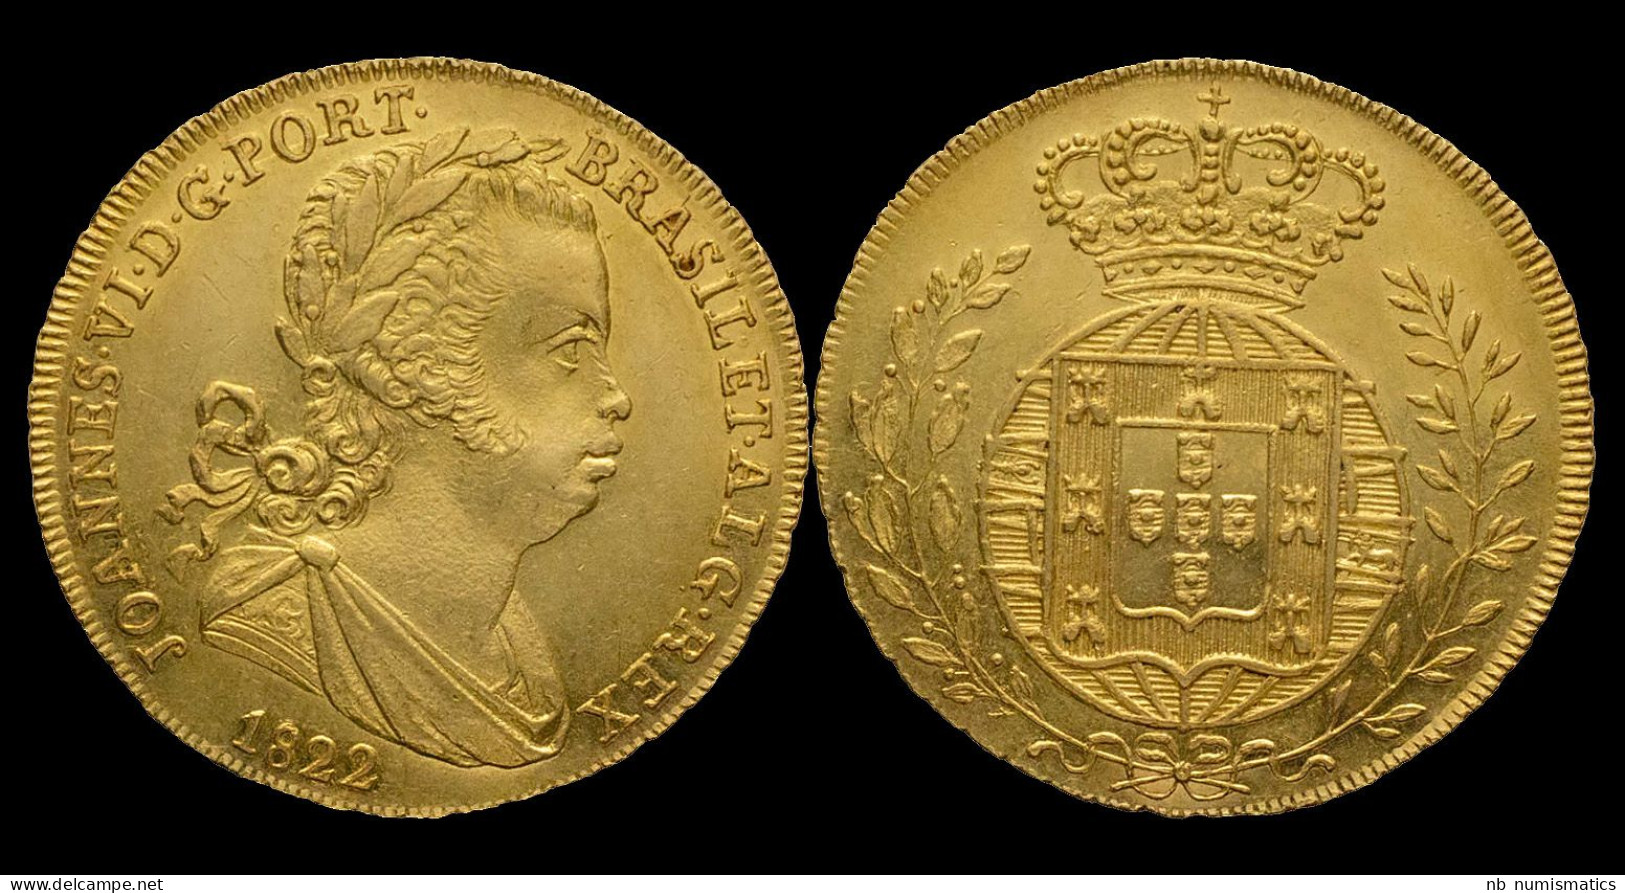 Portugal D.João VI Gold 3200 Réis 1822 - Portugal